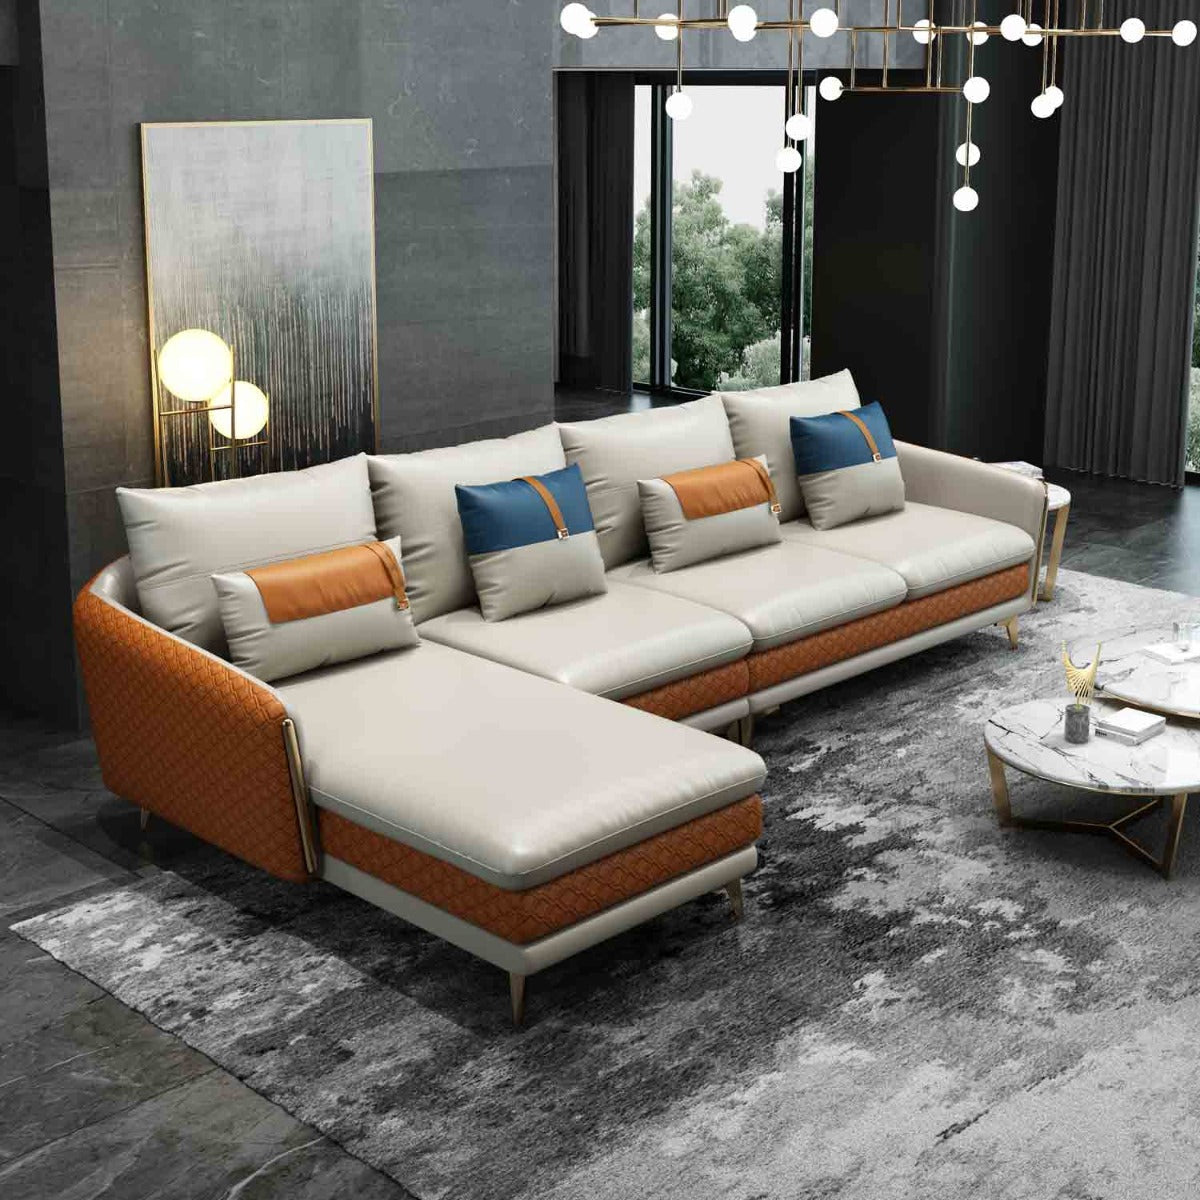 European Furniture - Icaro Left Hand Facing Sectional in Off White-Orange - 64435L-4LHF - New Star Living